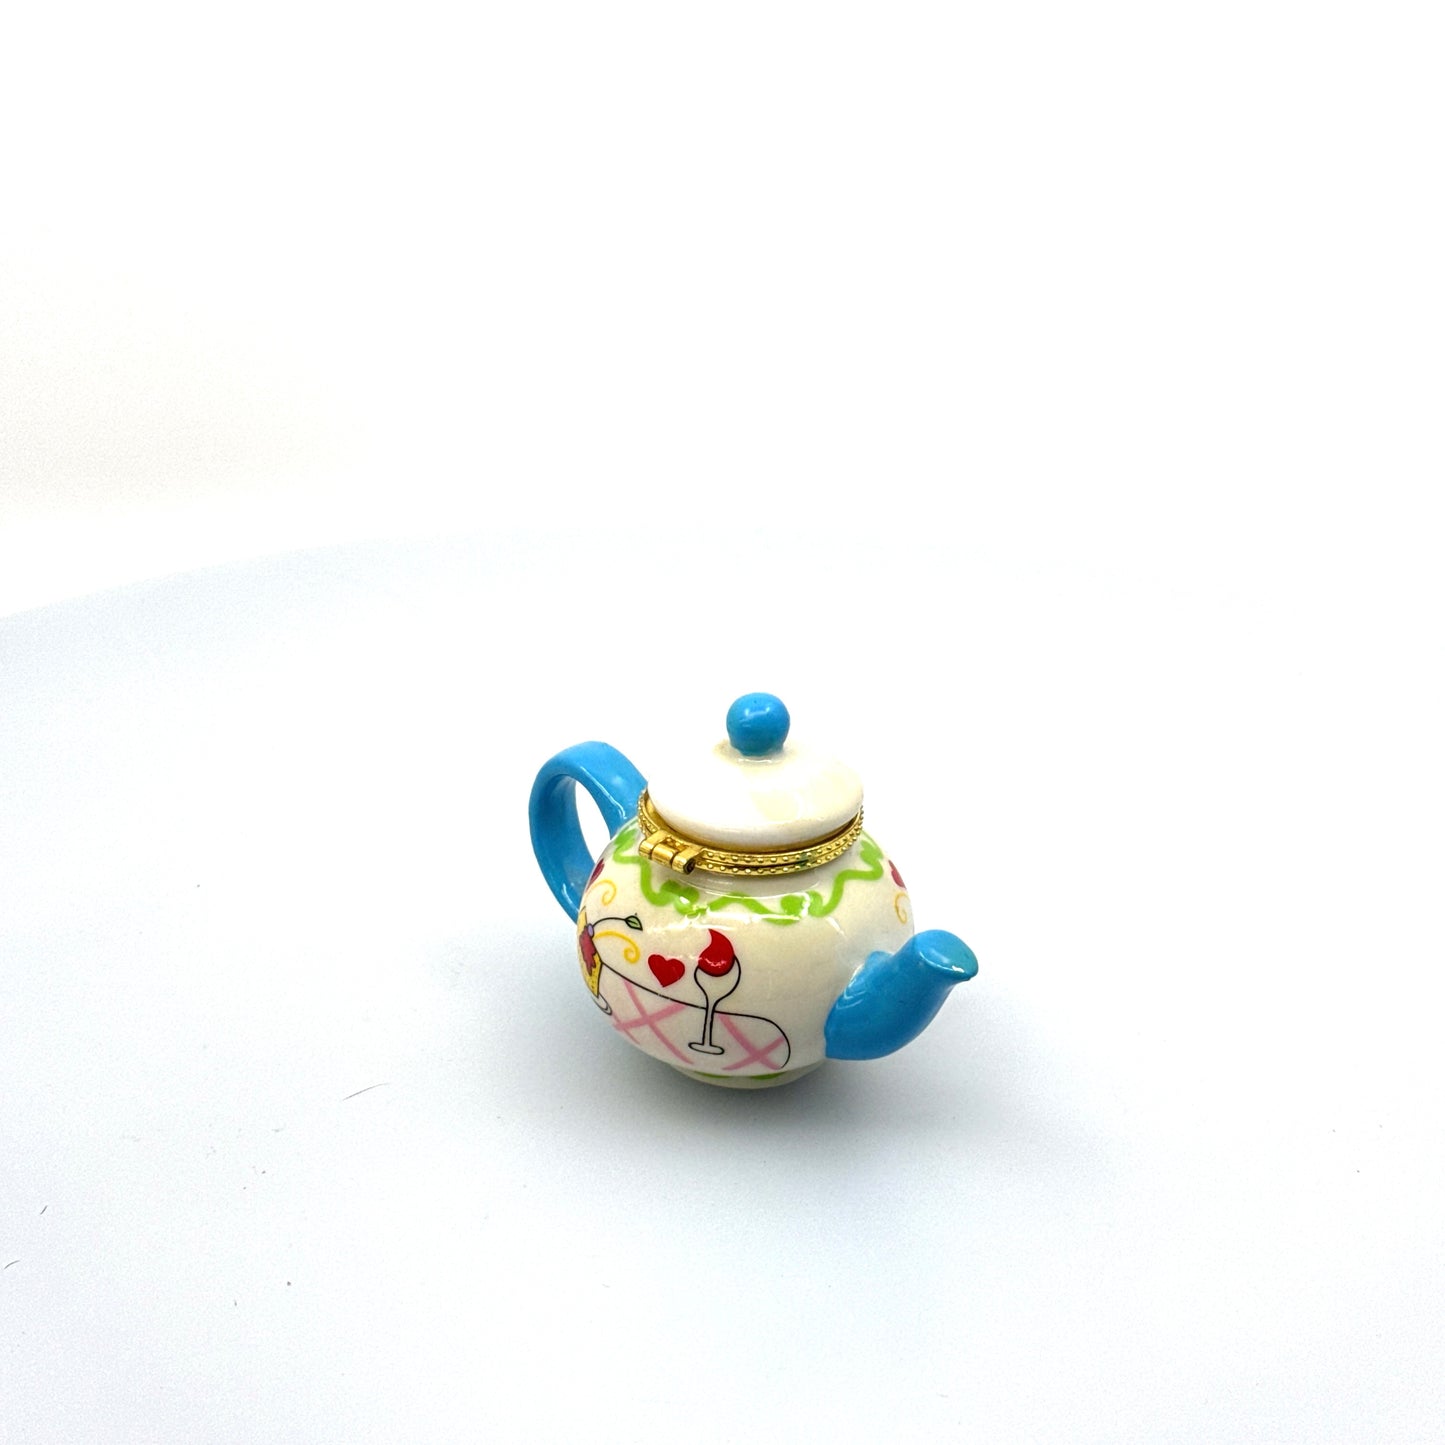 Collectible | Jewelry Box Miniature Teapot | Color: White | Vintage